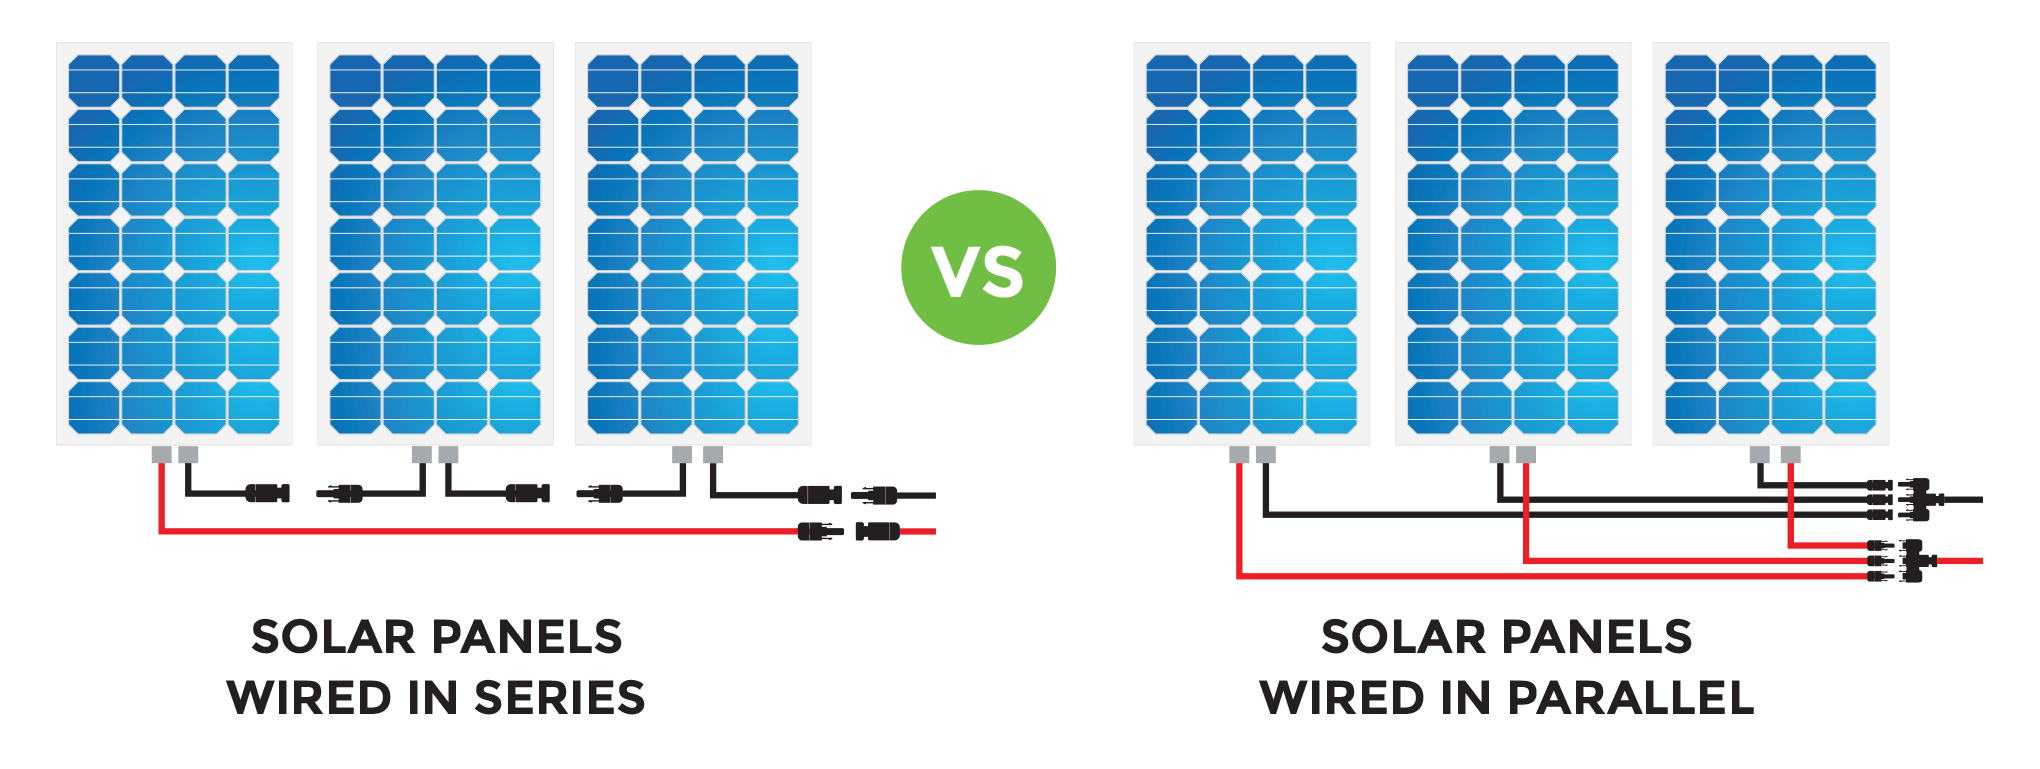 wiring solar panels in series vs parallel